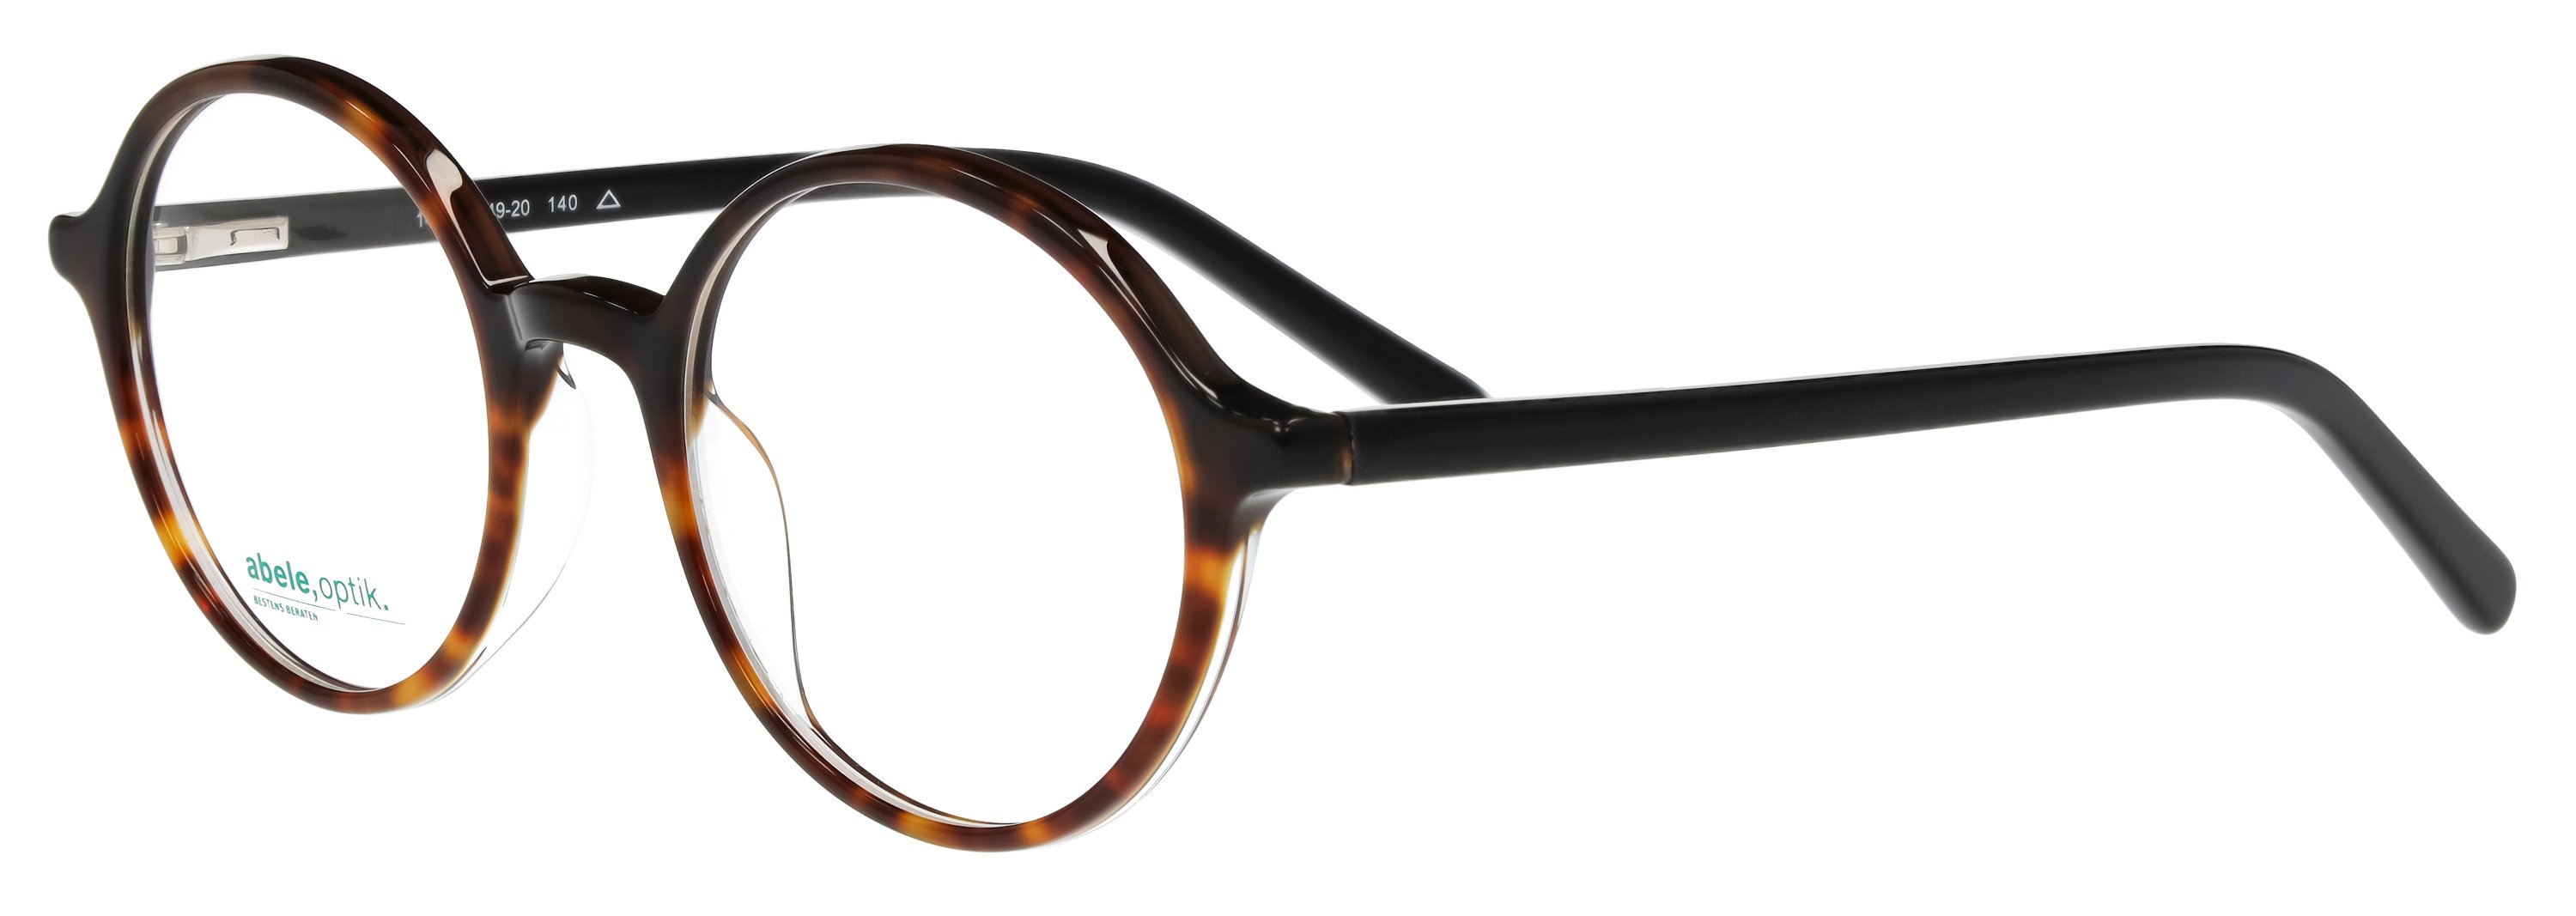 abele optik Brille 148411 für Damen in havanna dunkelbraun